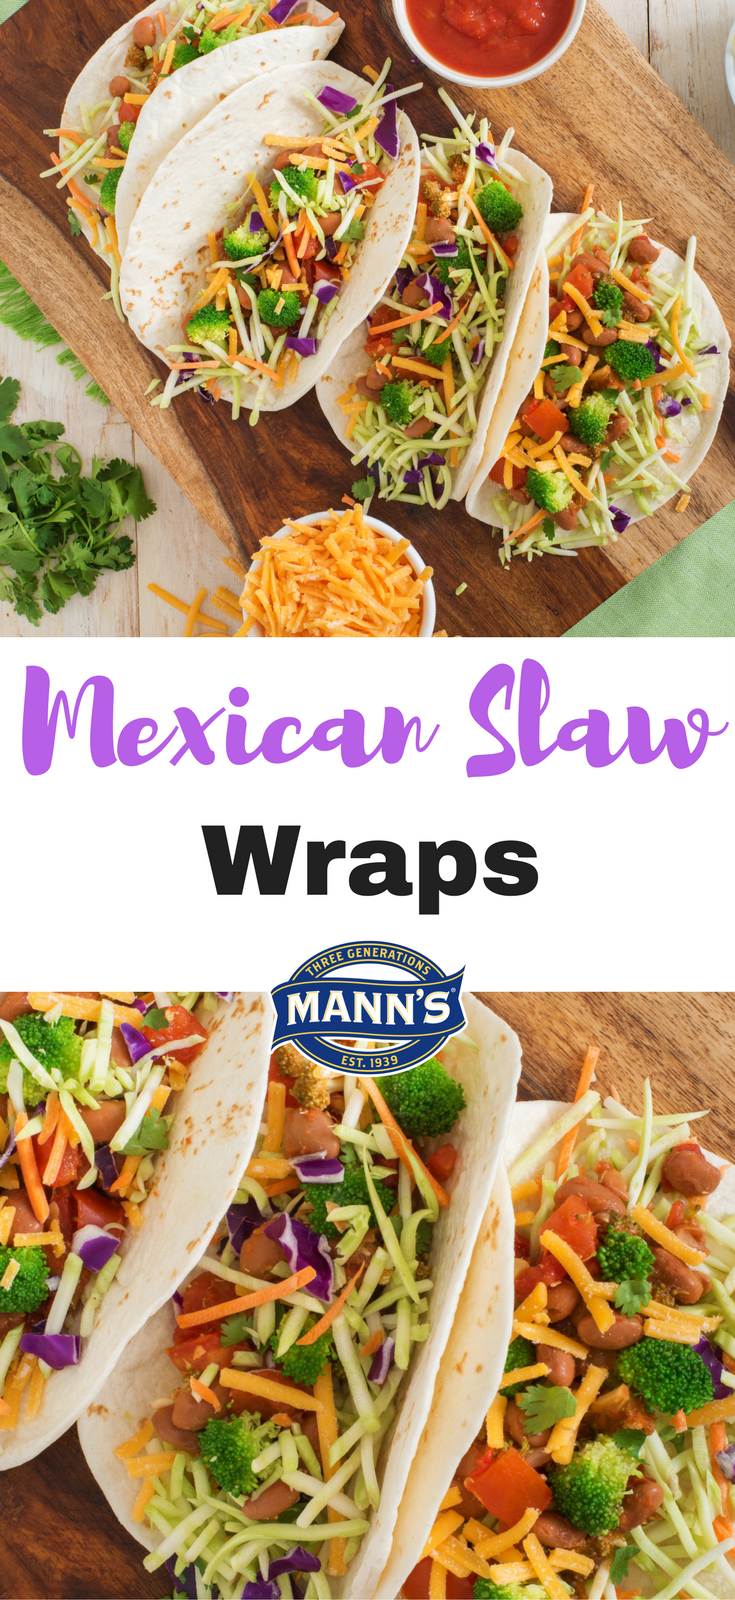 Mexican Slaw Wraps | Mann's Fresh Vegetables